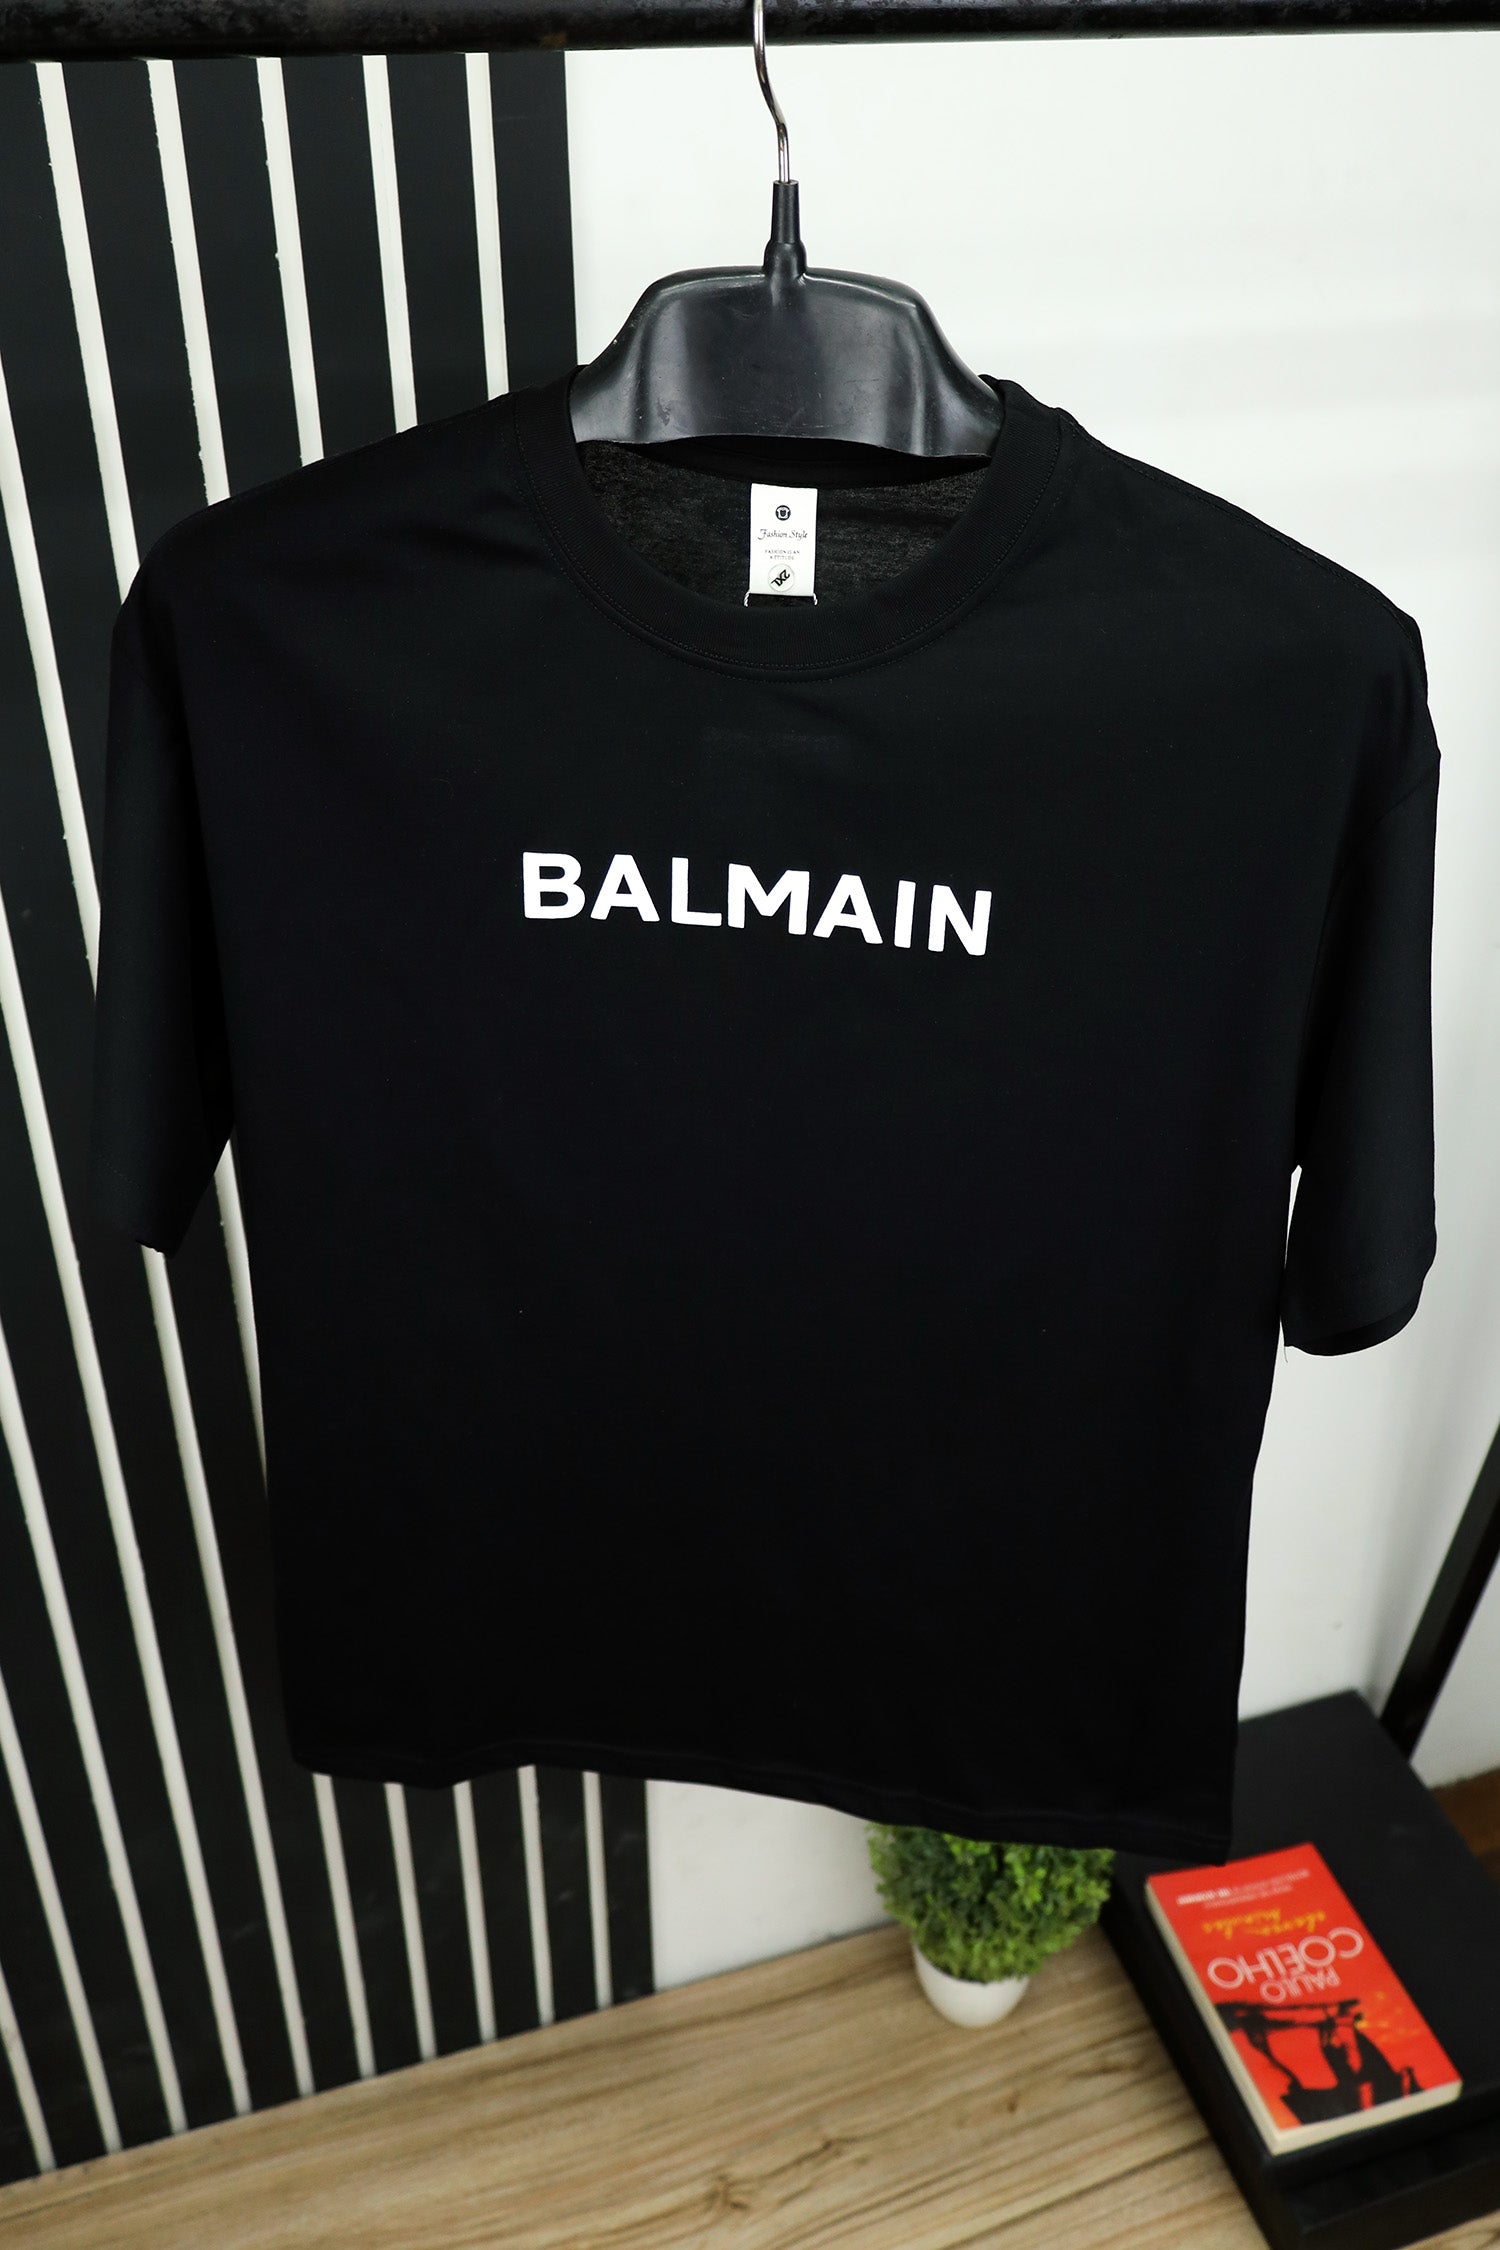 Blmain Front Slogan Oversized T-Shirt